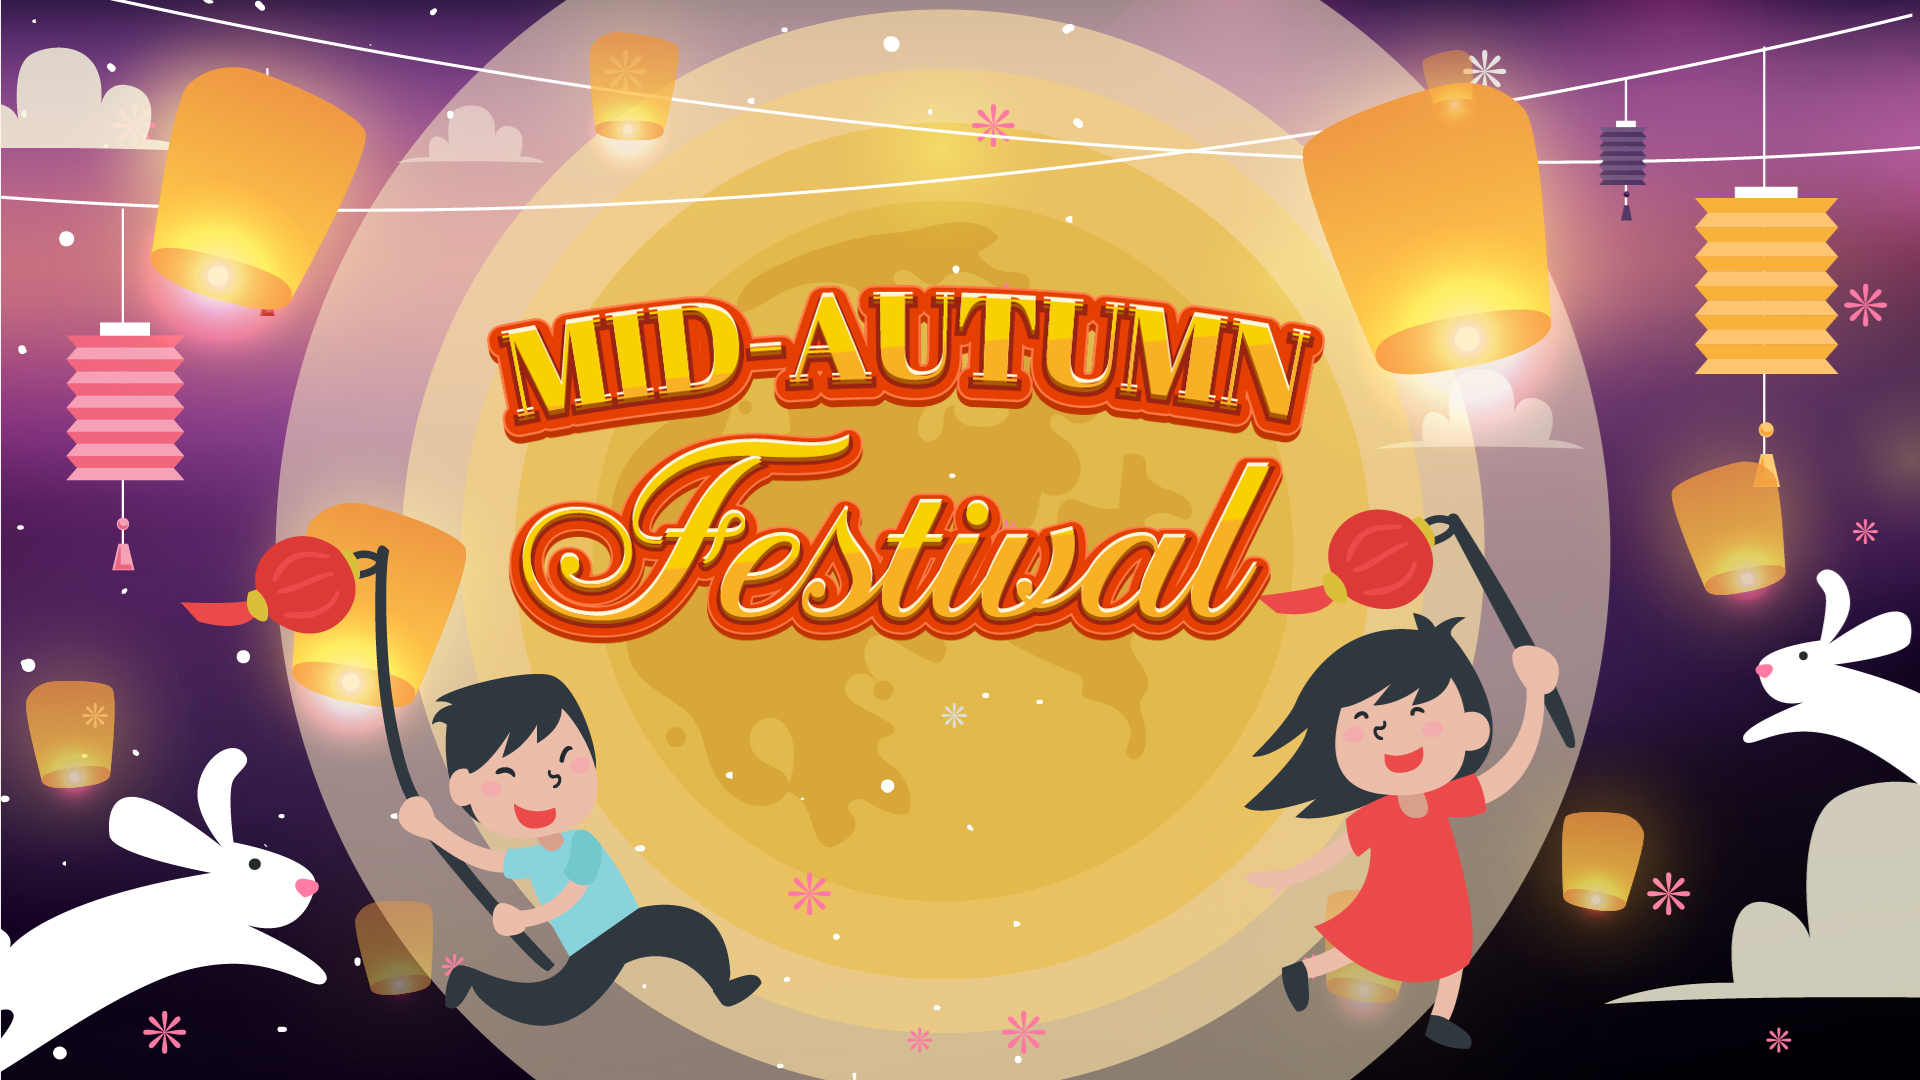 [Game trung thu] Mid autumn festival